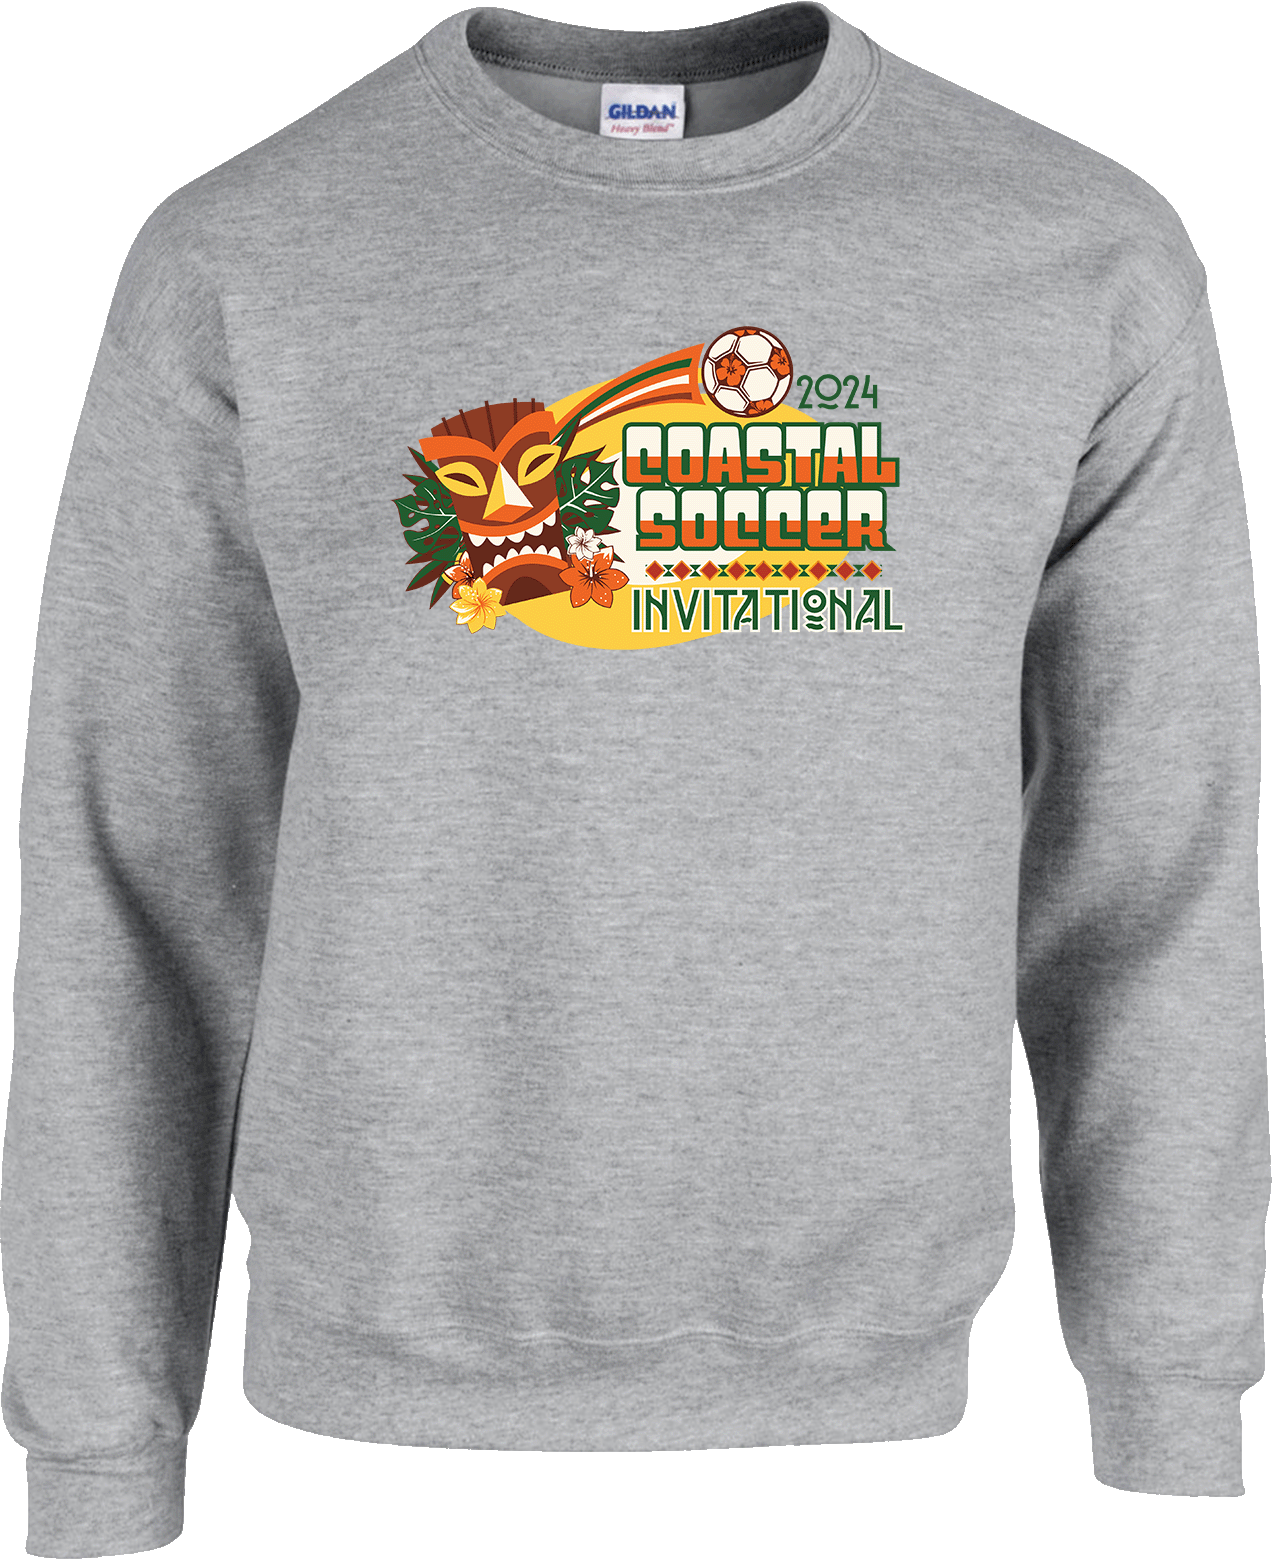 Crew Sweatershirt - 2024 Coastal Soccer Invitational